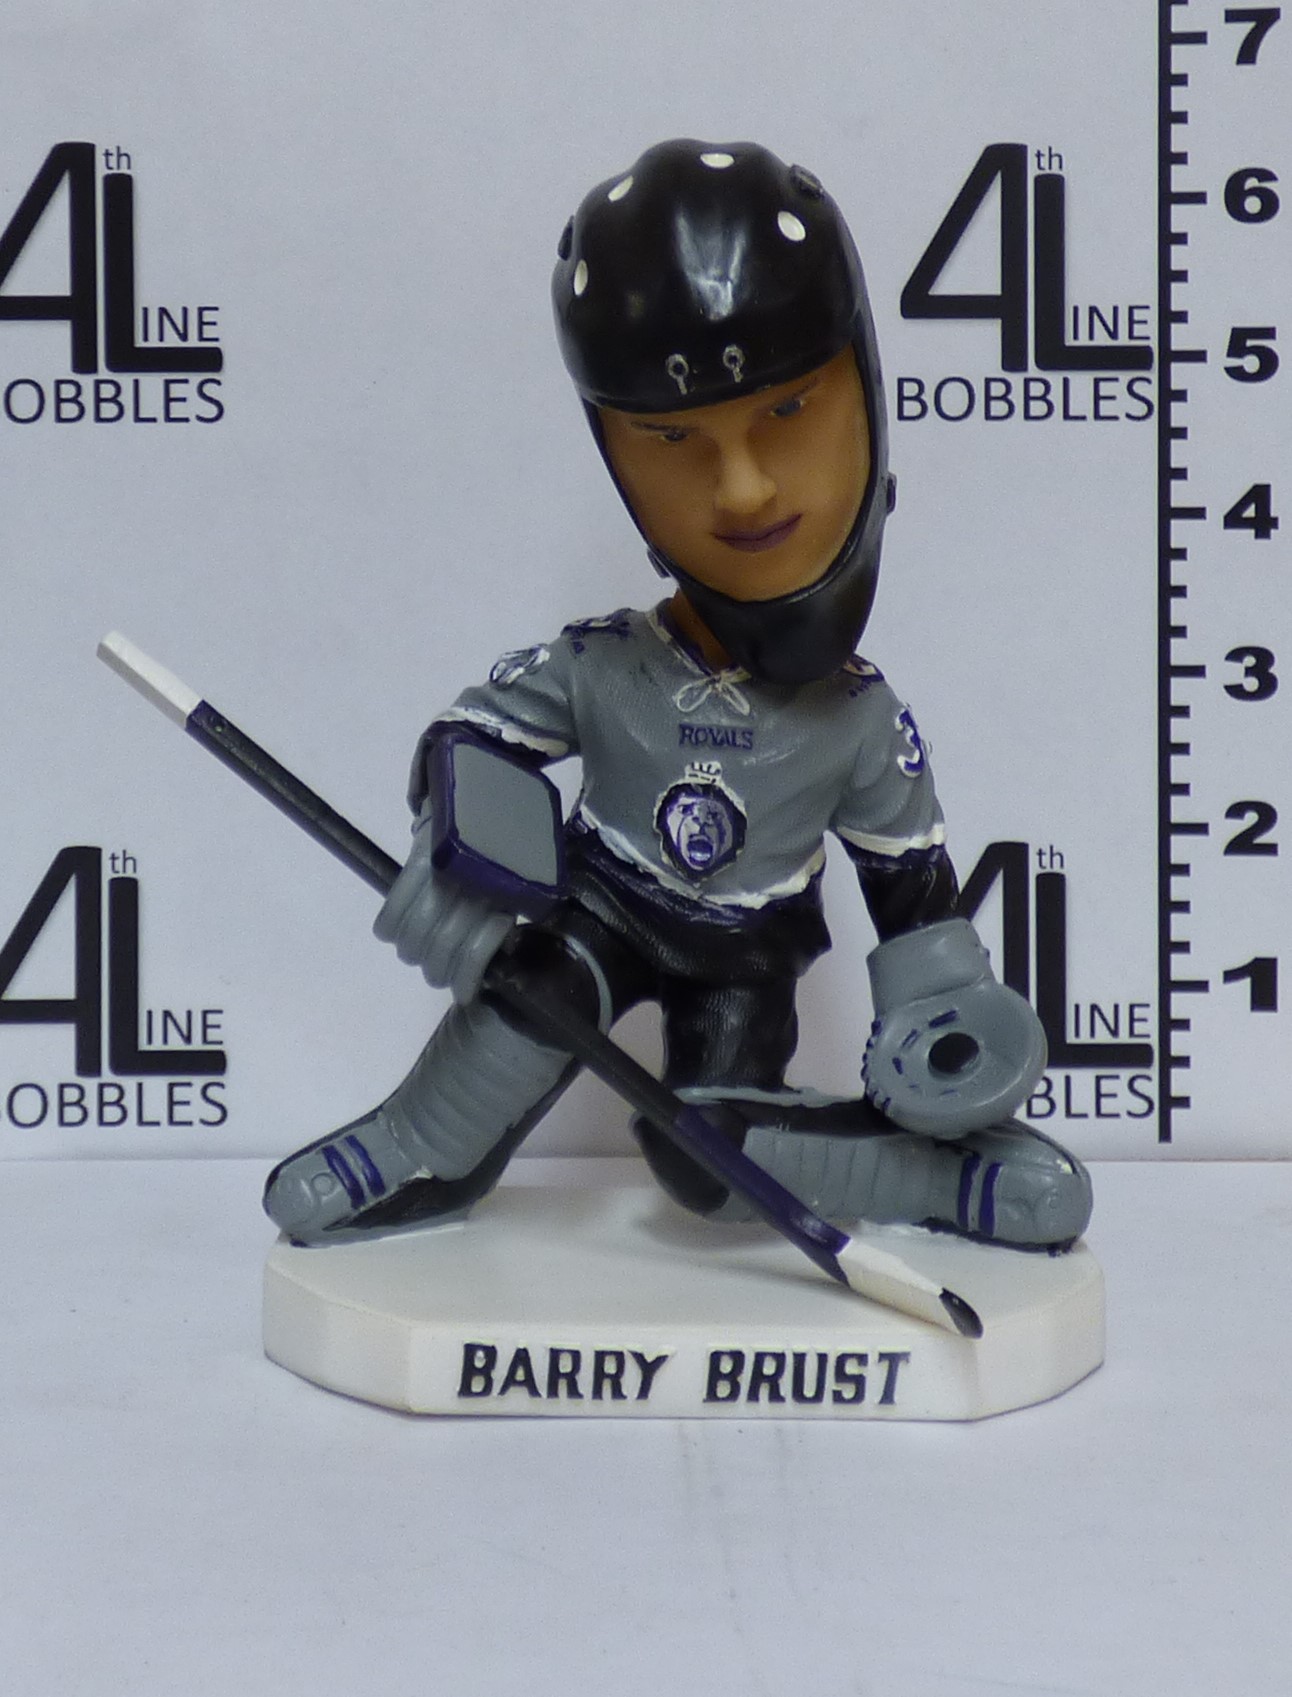 Barry Brust bobblehead